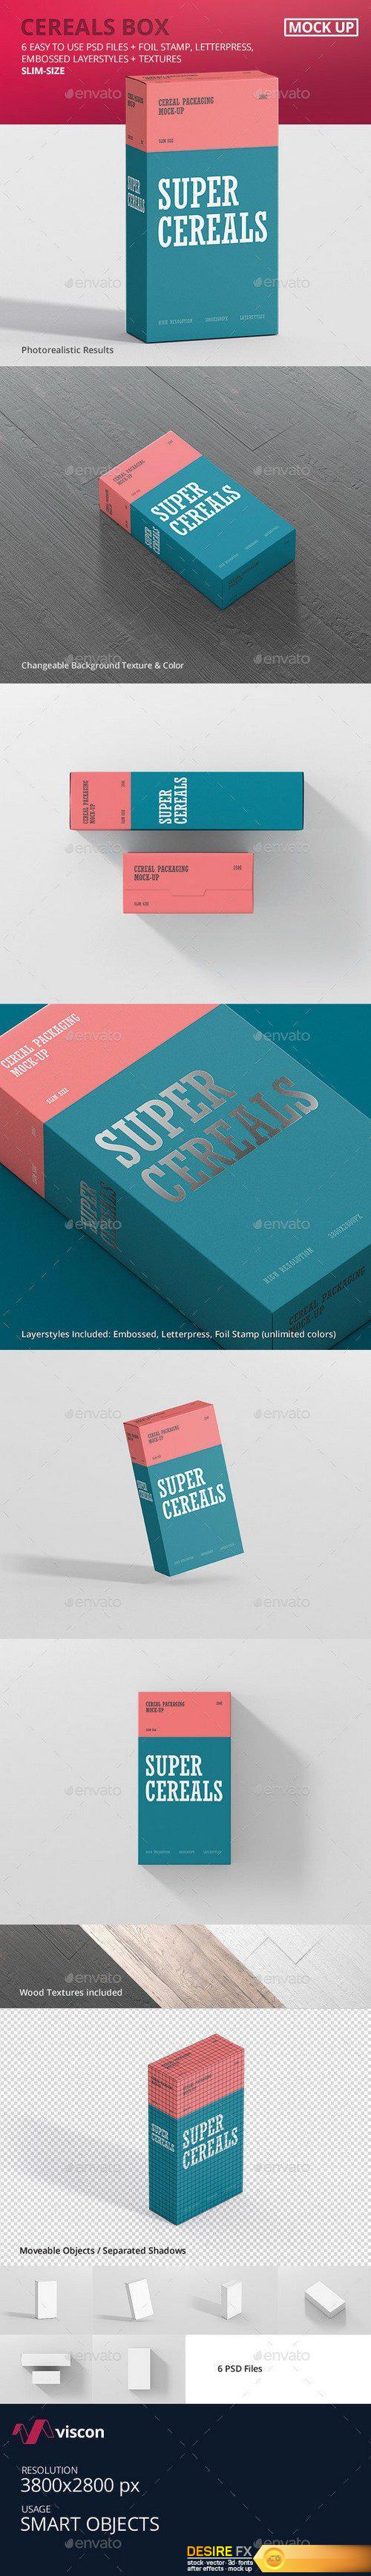 Graphicriver - Cereals Box Mockup - Slim Size 20997447